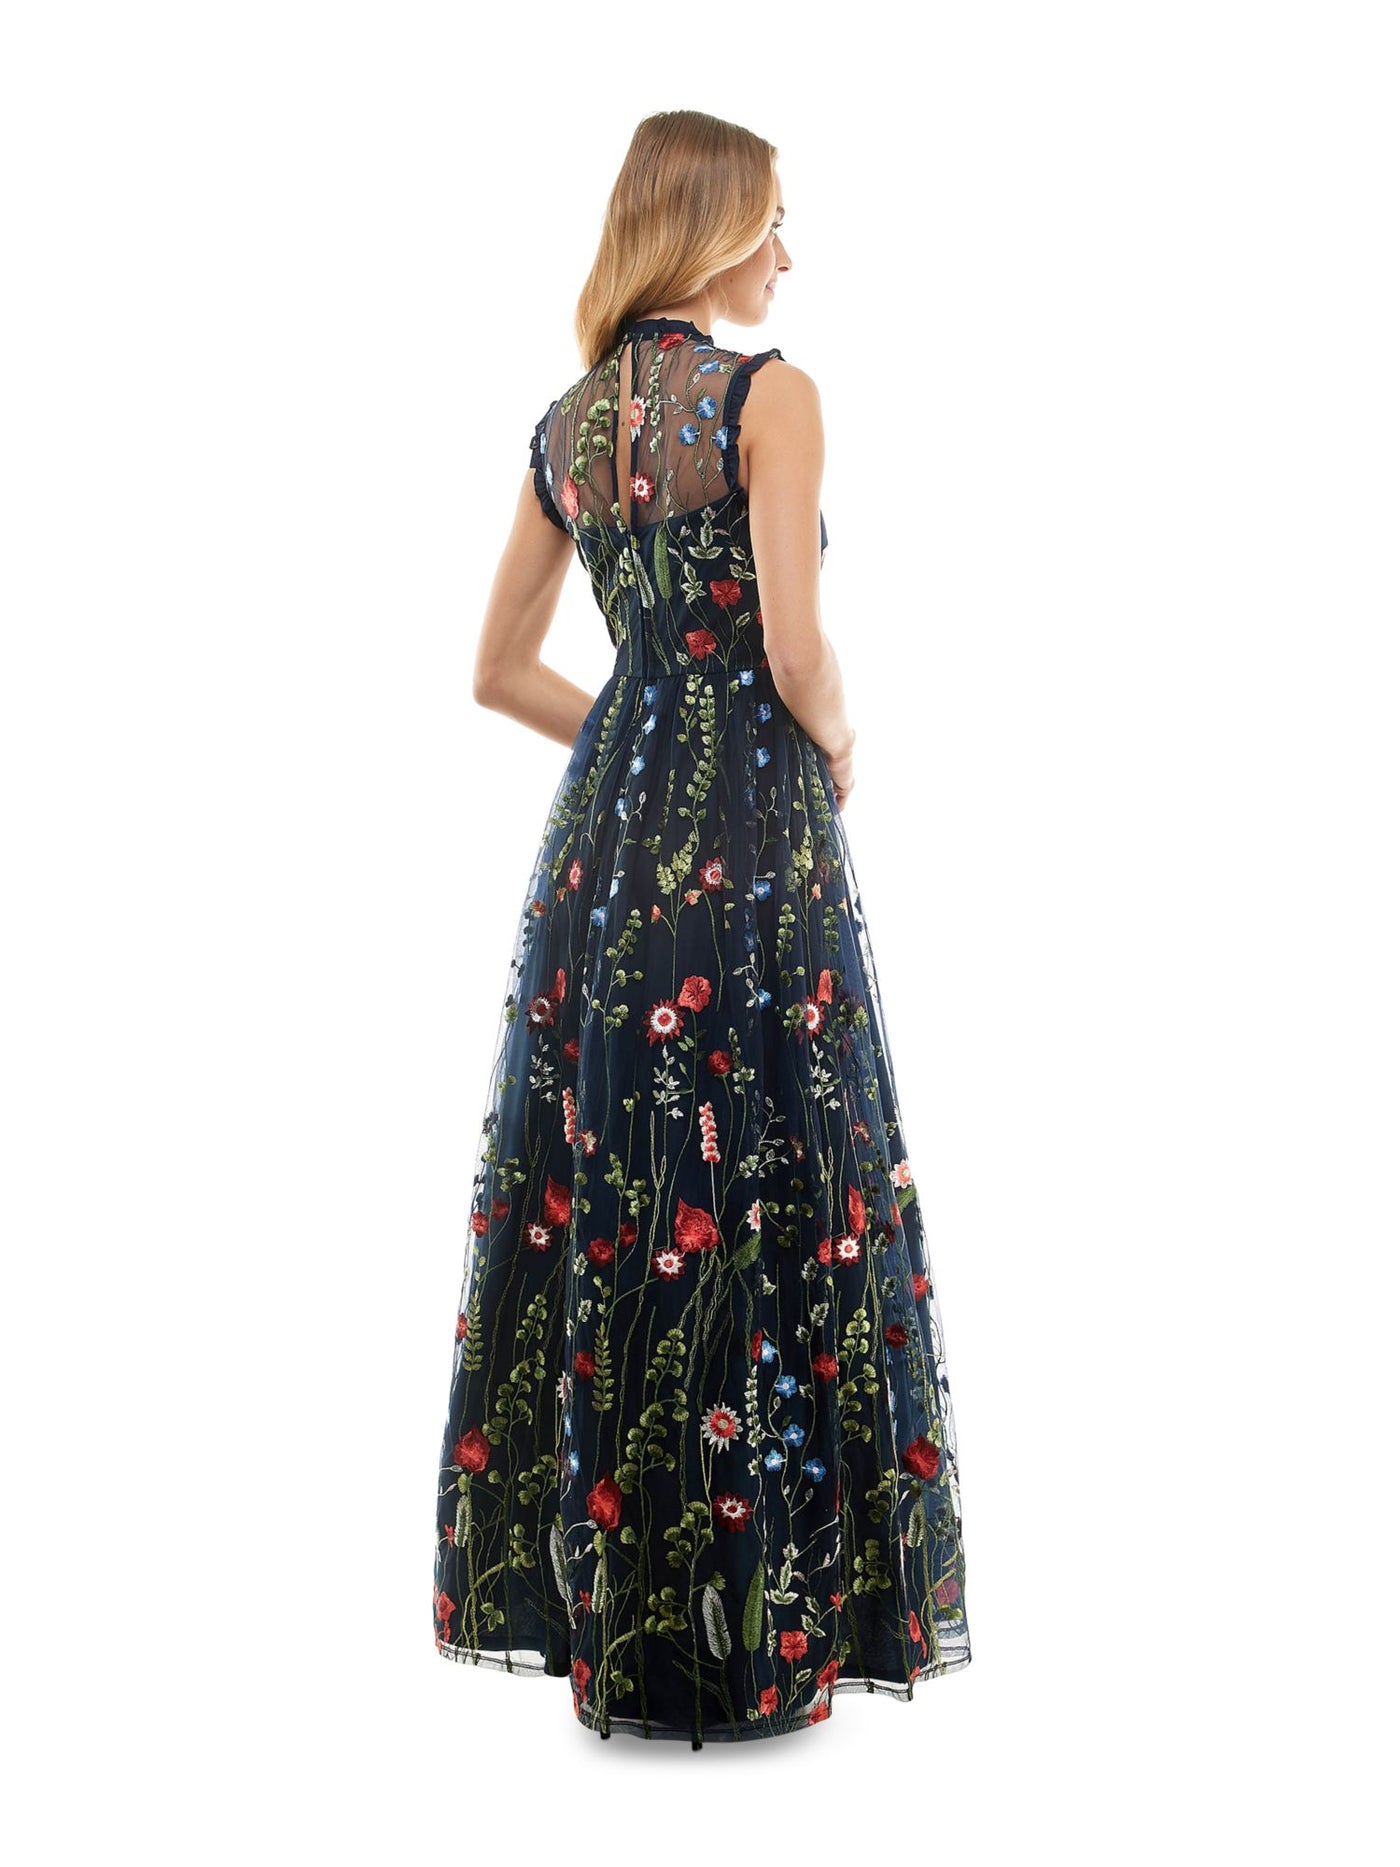 CITY STUDIO Womens Navy Embroidered Ruffled Trim Floral Sleeveless Illusion Neckline Full-Length Evening Dress Juniors 7